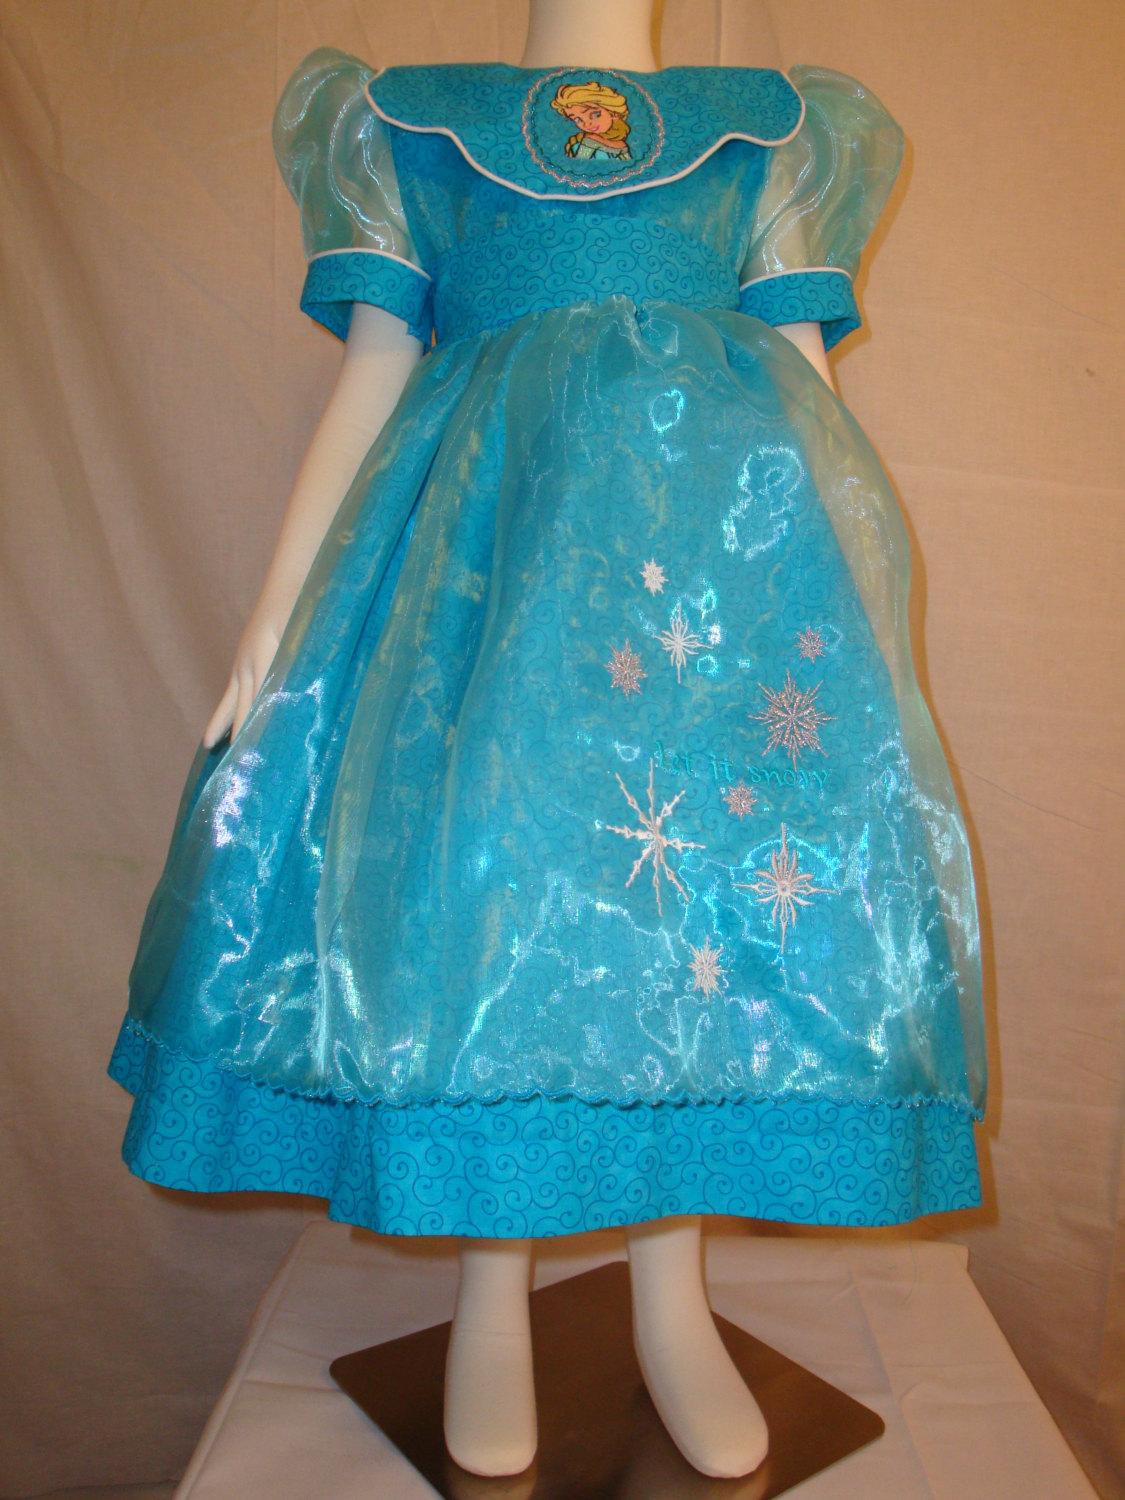 Embroidered princess Elsa dress